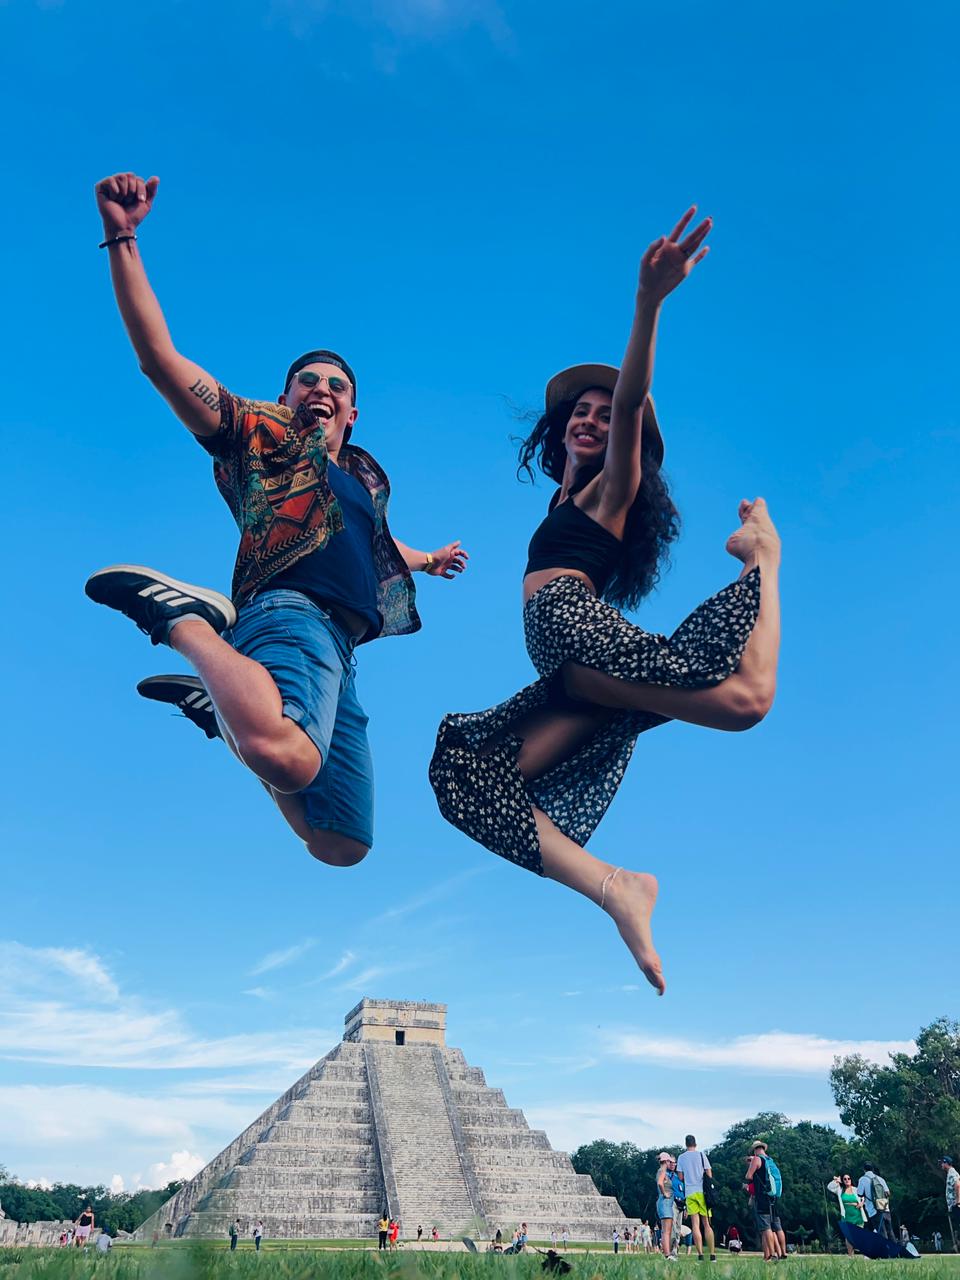 Yucatán: Mayan Adventure